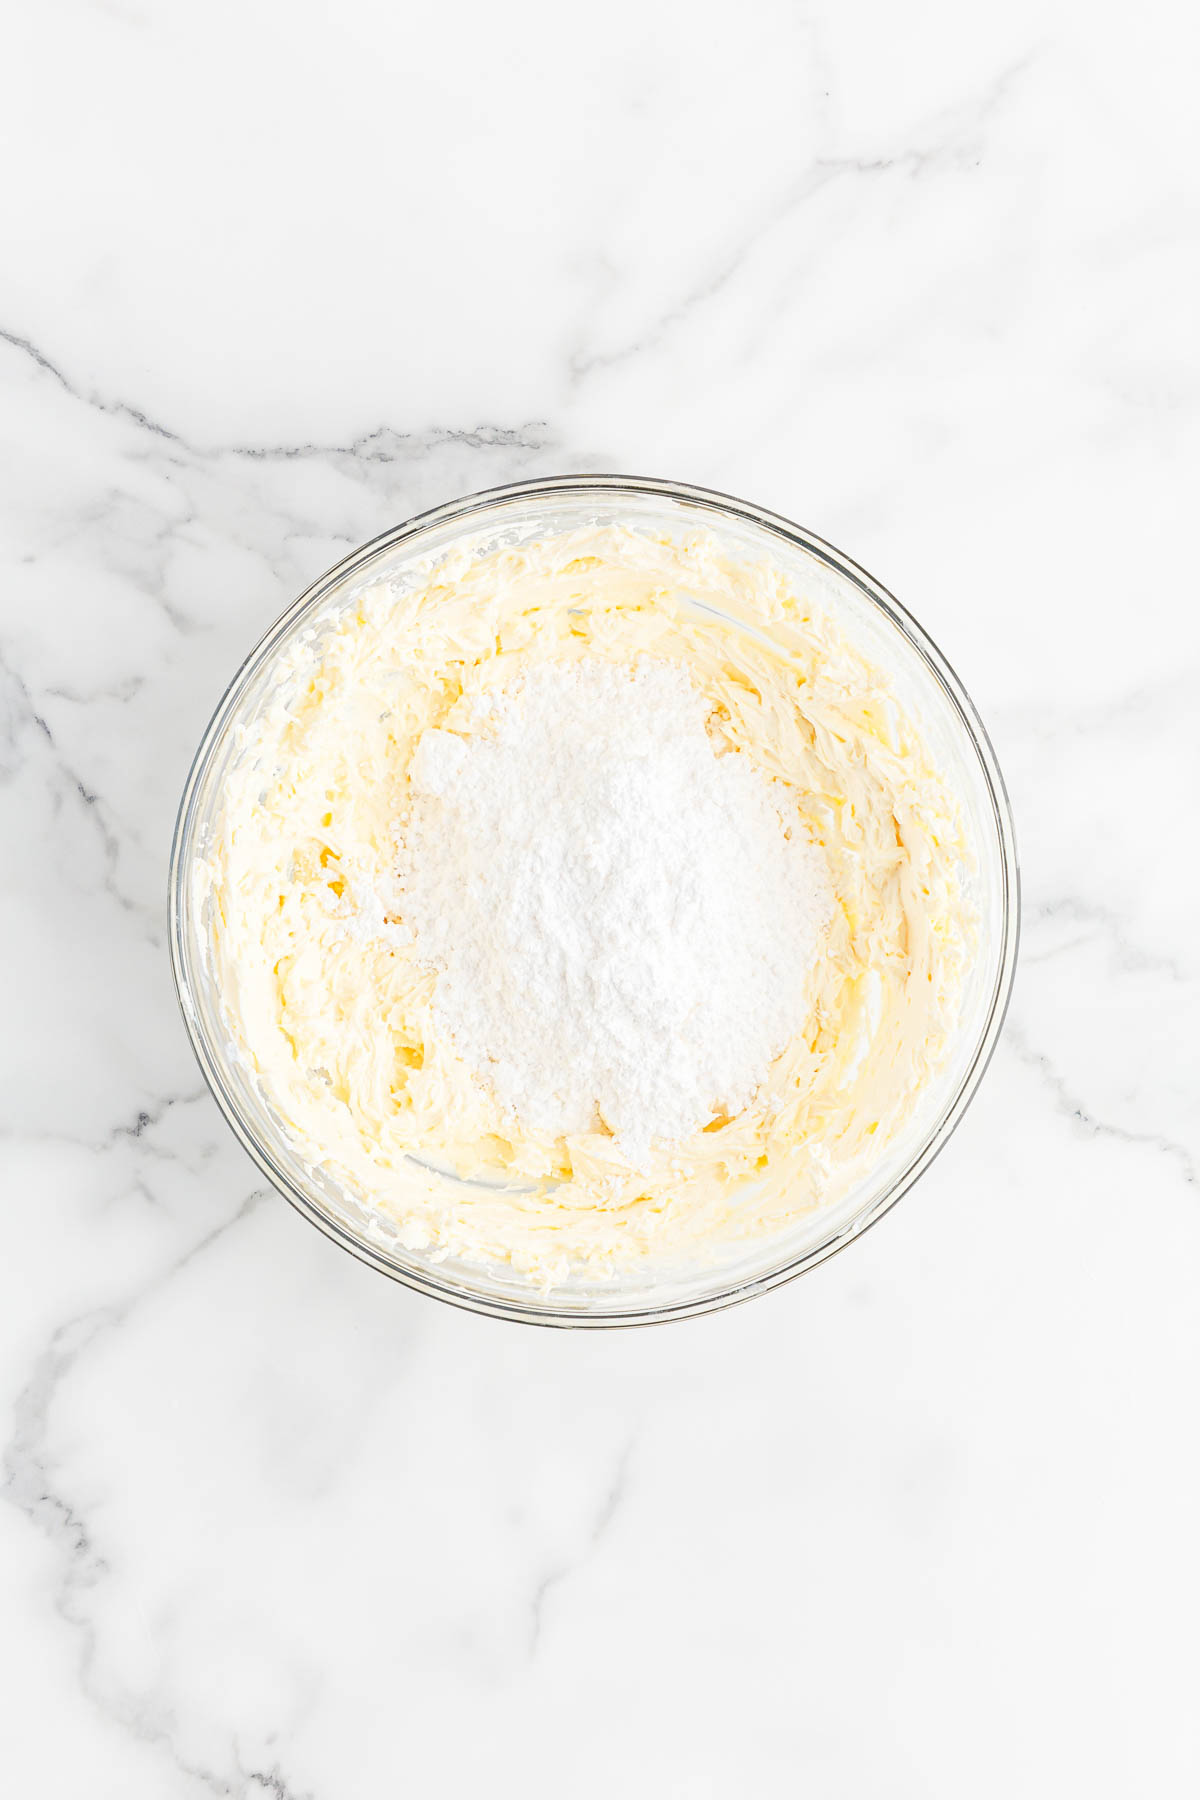 Powdered sugar in cream cheese mixture